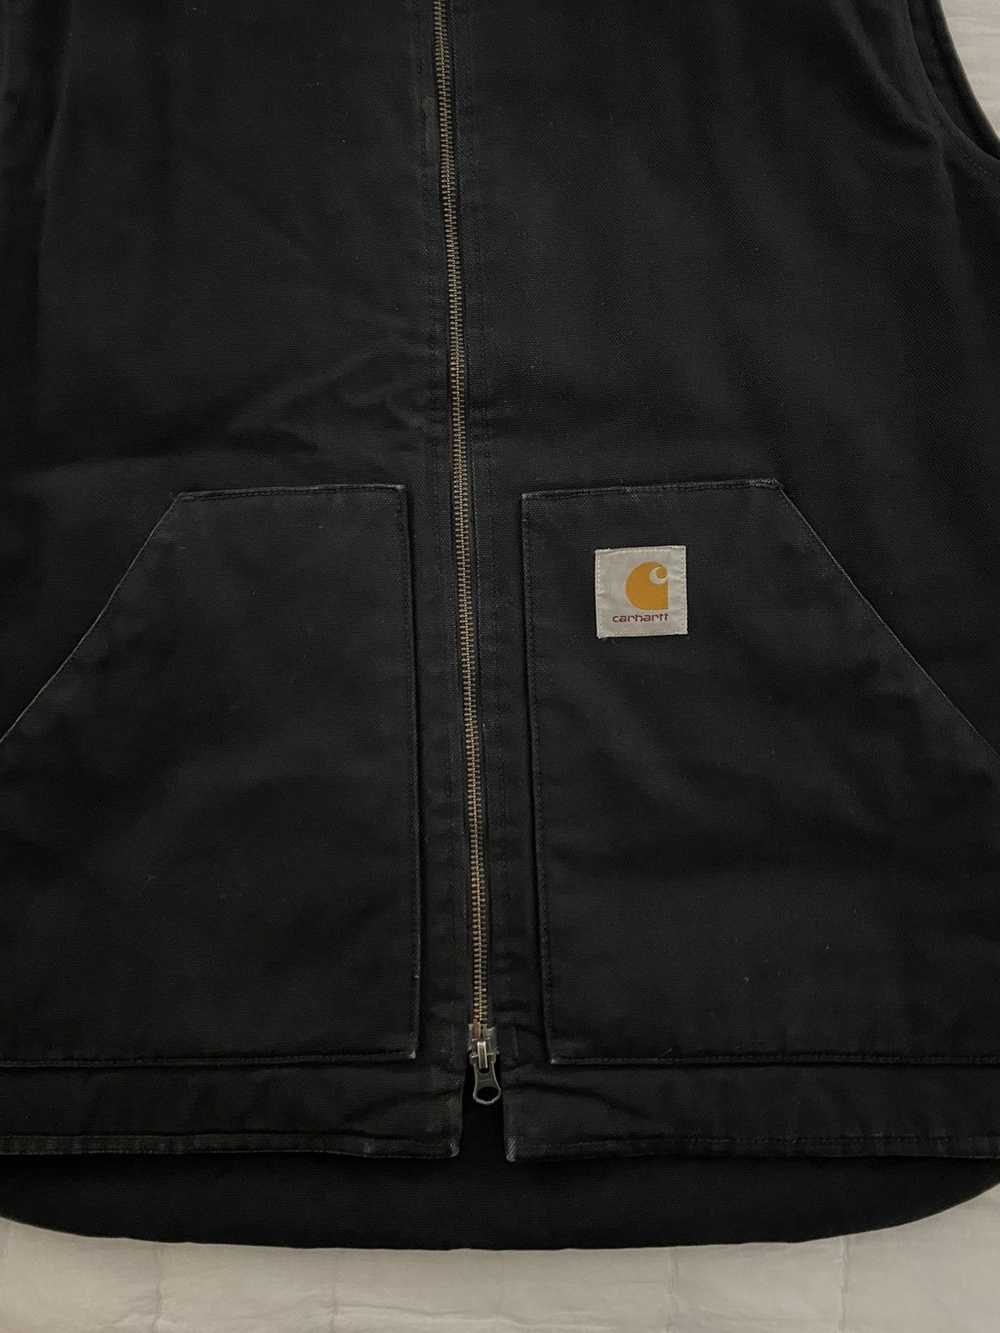 Carhartt Wip Carhartt WIP Black Canvas Vest - image 5